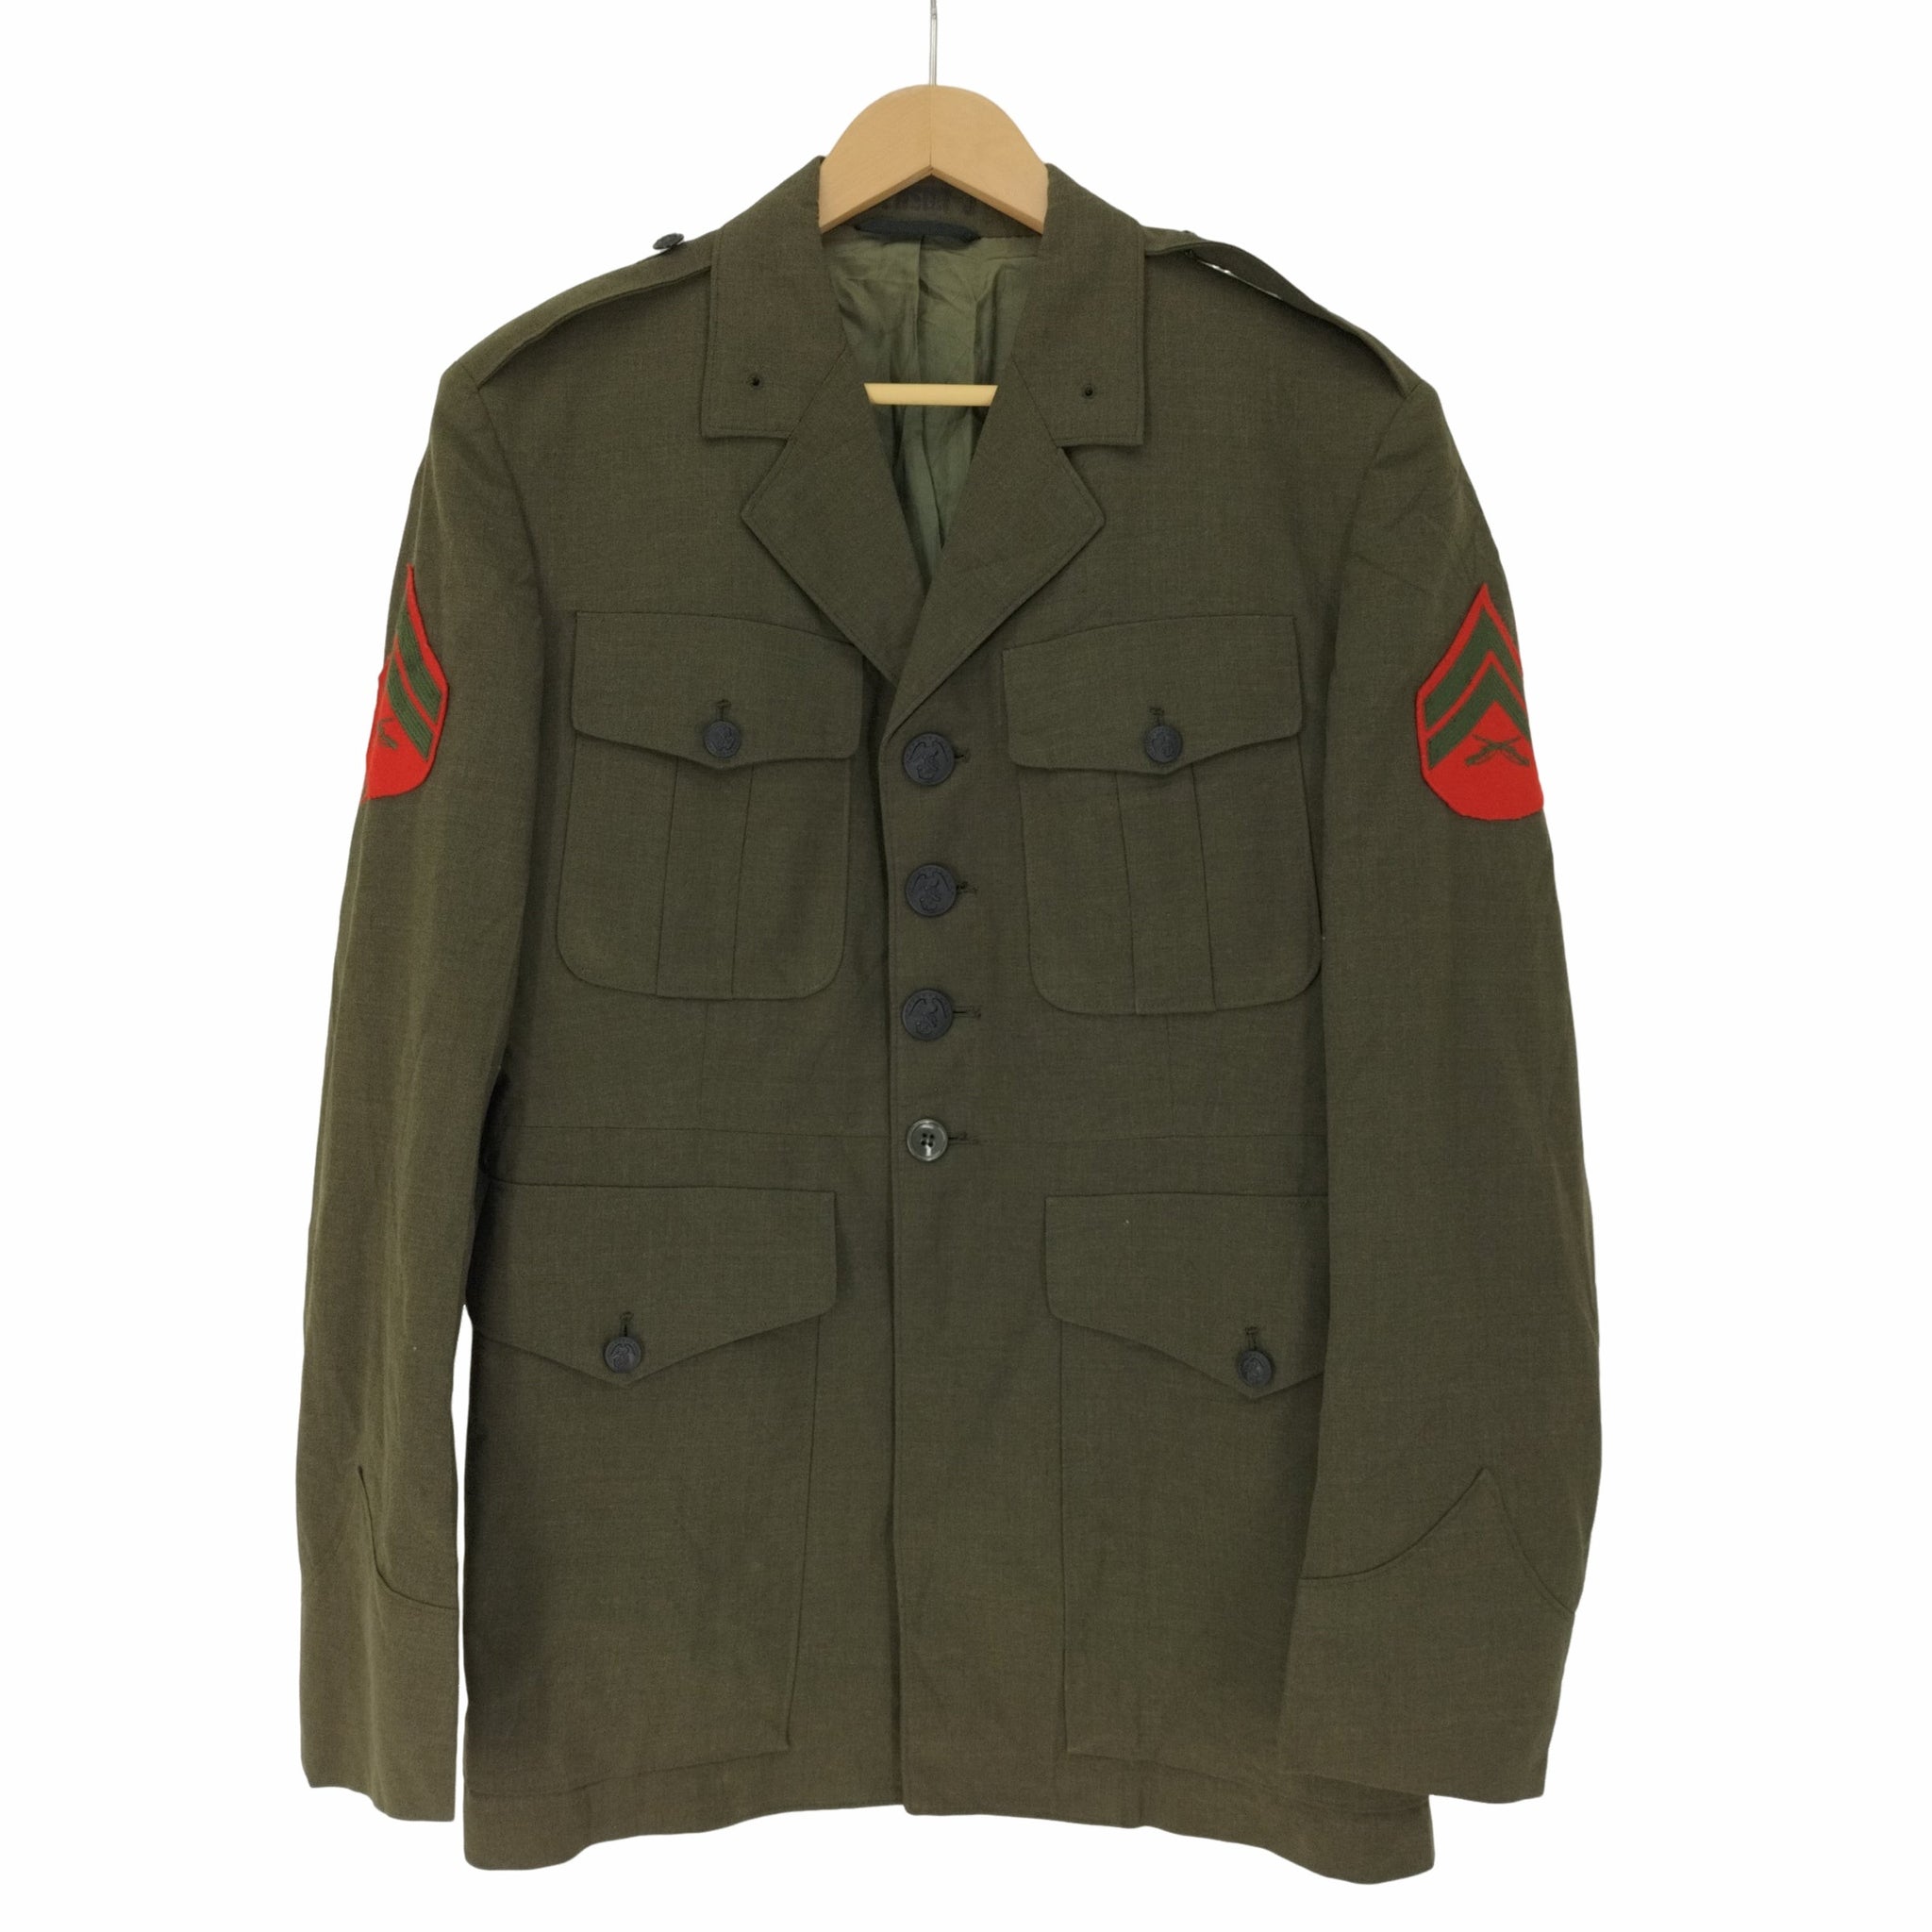 US ARMY(ユーエスアーミー)USMC ドレスジャケット COAT MAN'S POLY/WOOL TROPICAL GREEN SHADE 2241 WITH BELT